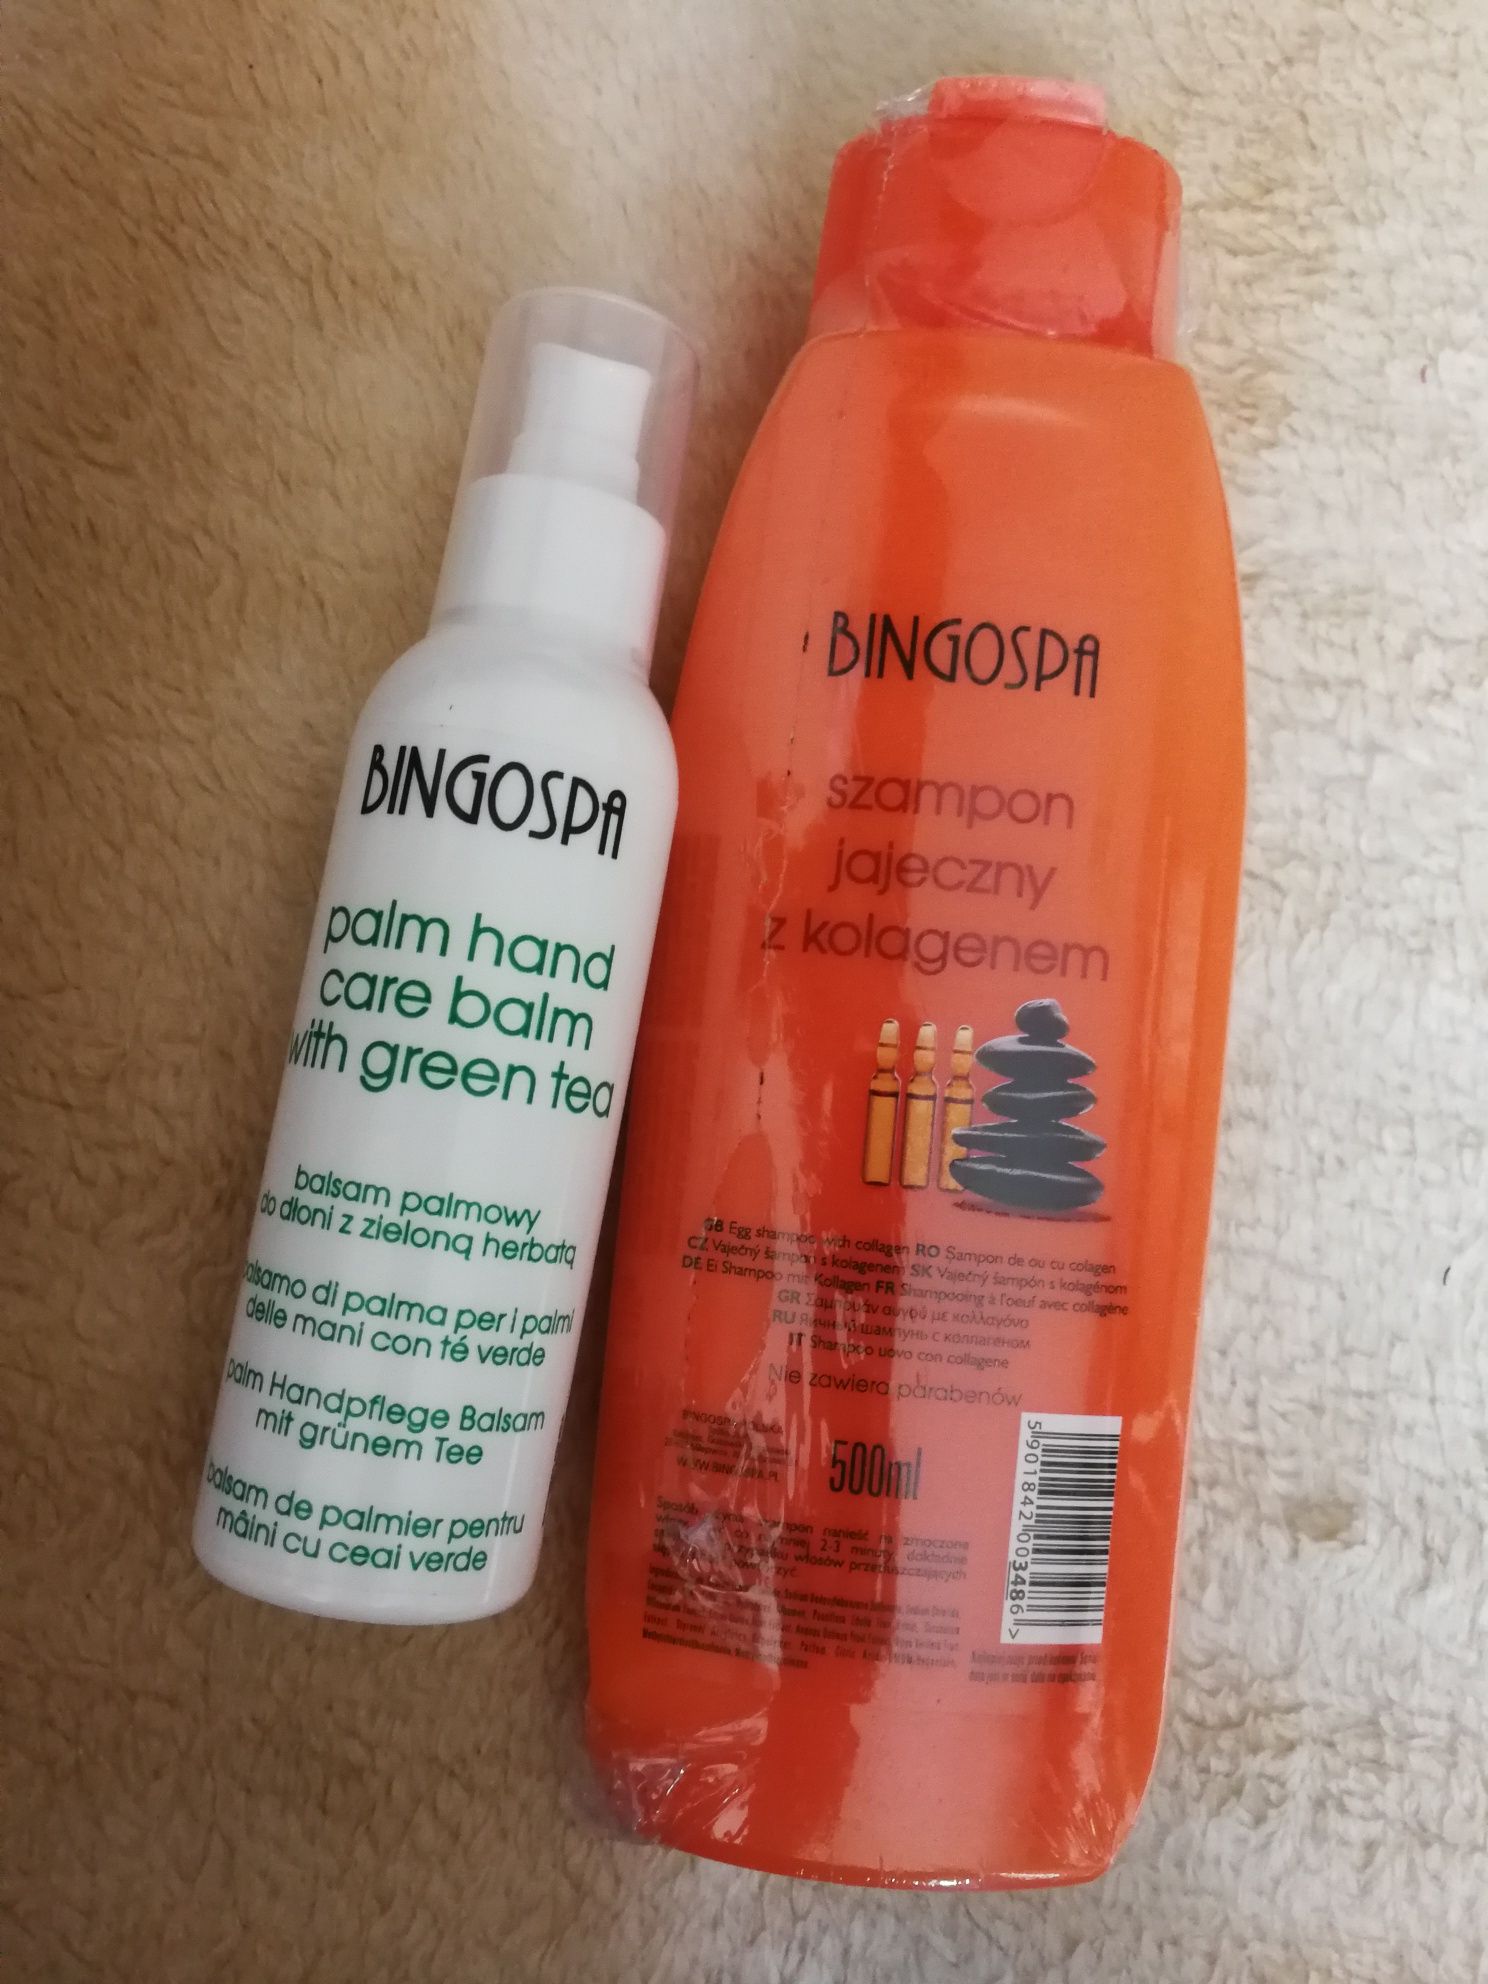 Bingospa szampon i balsam